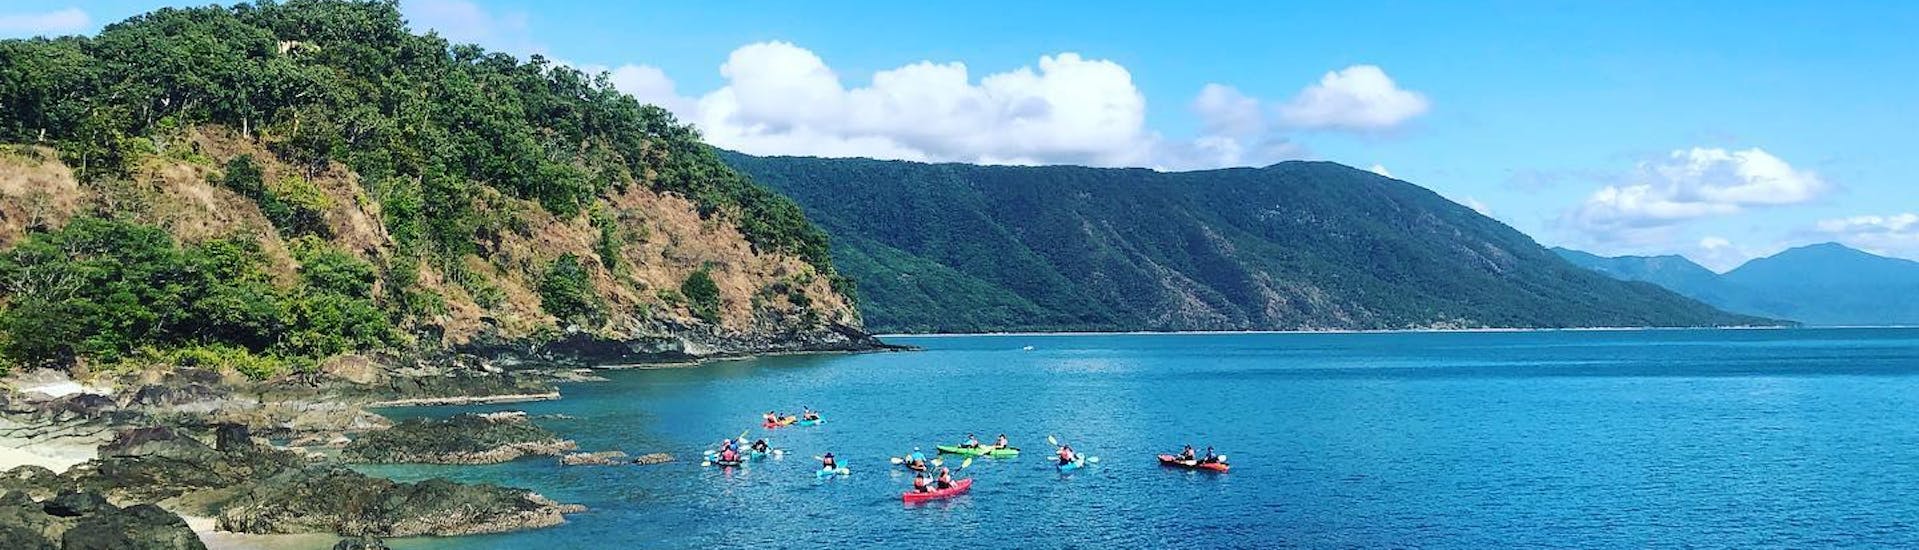 turtle-kayaking-tour-in-cairns-pacific-watersports-hero